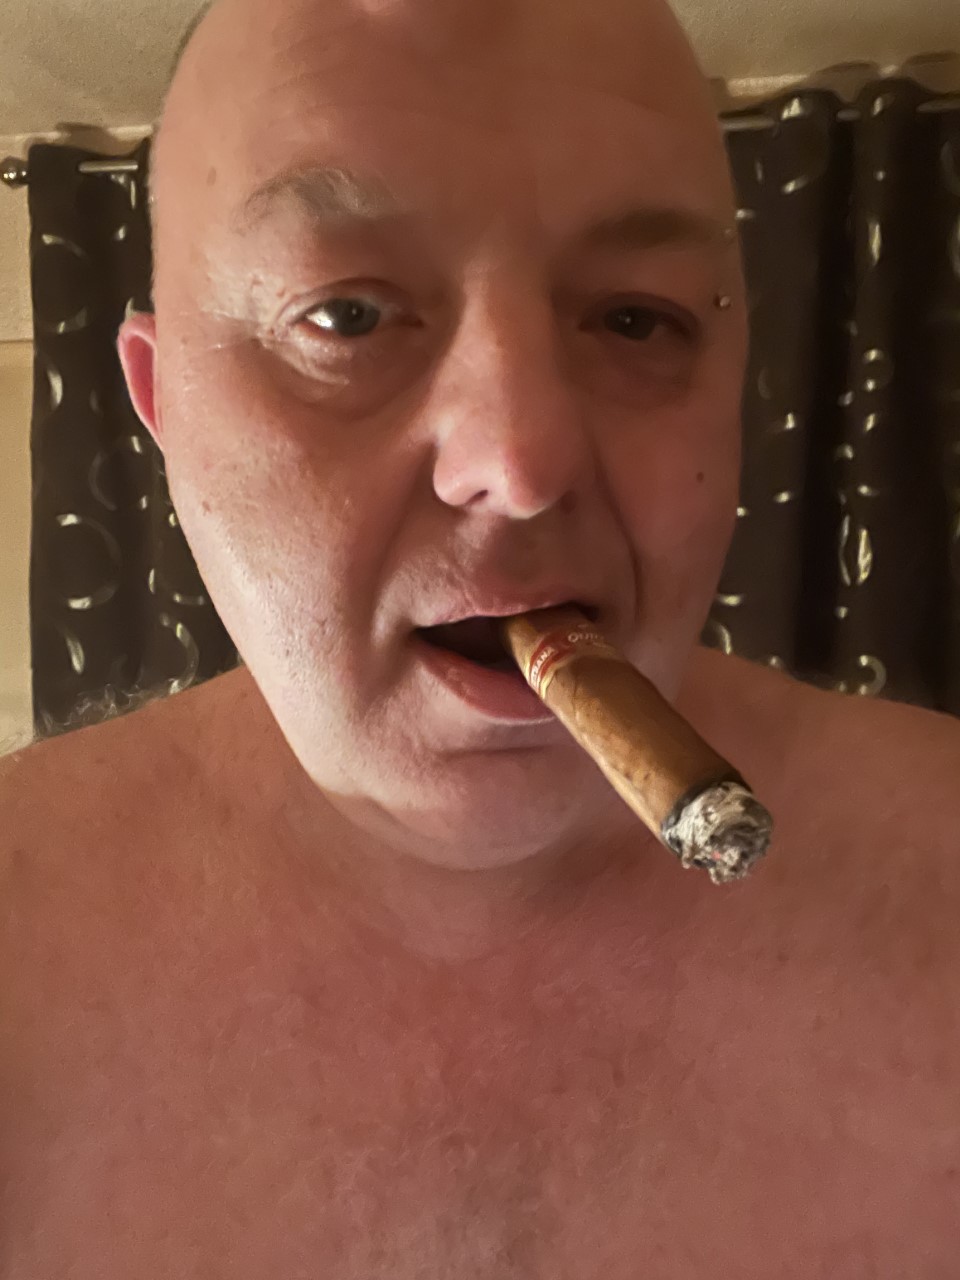 Post Surgery Cigar